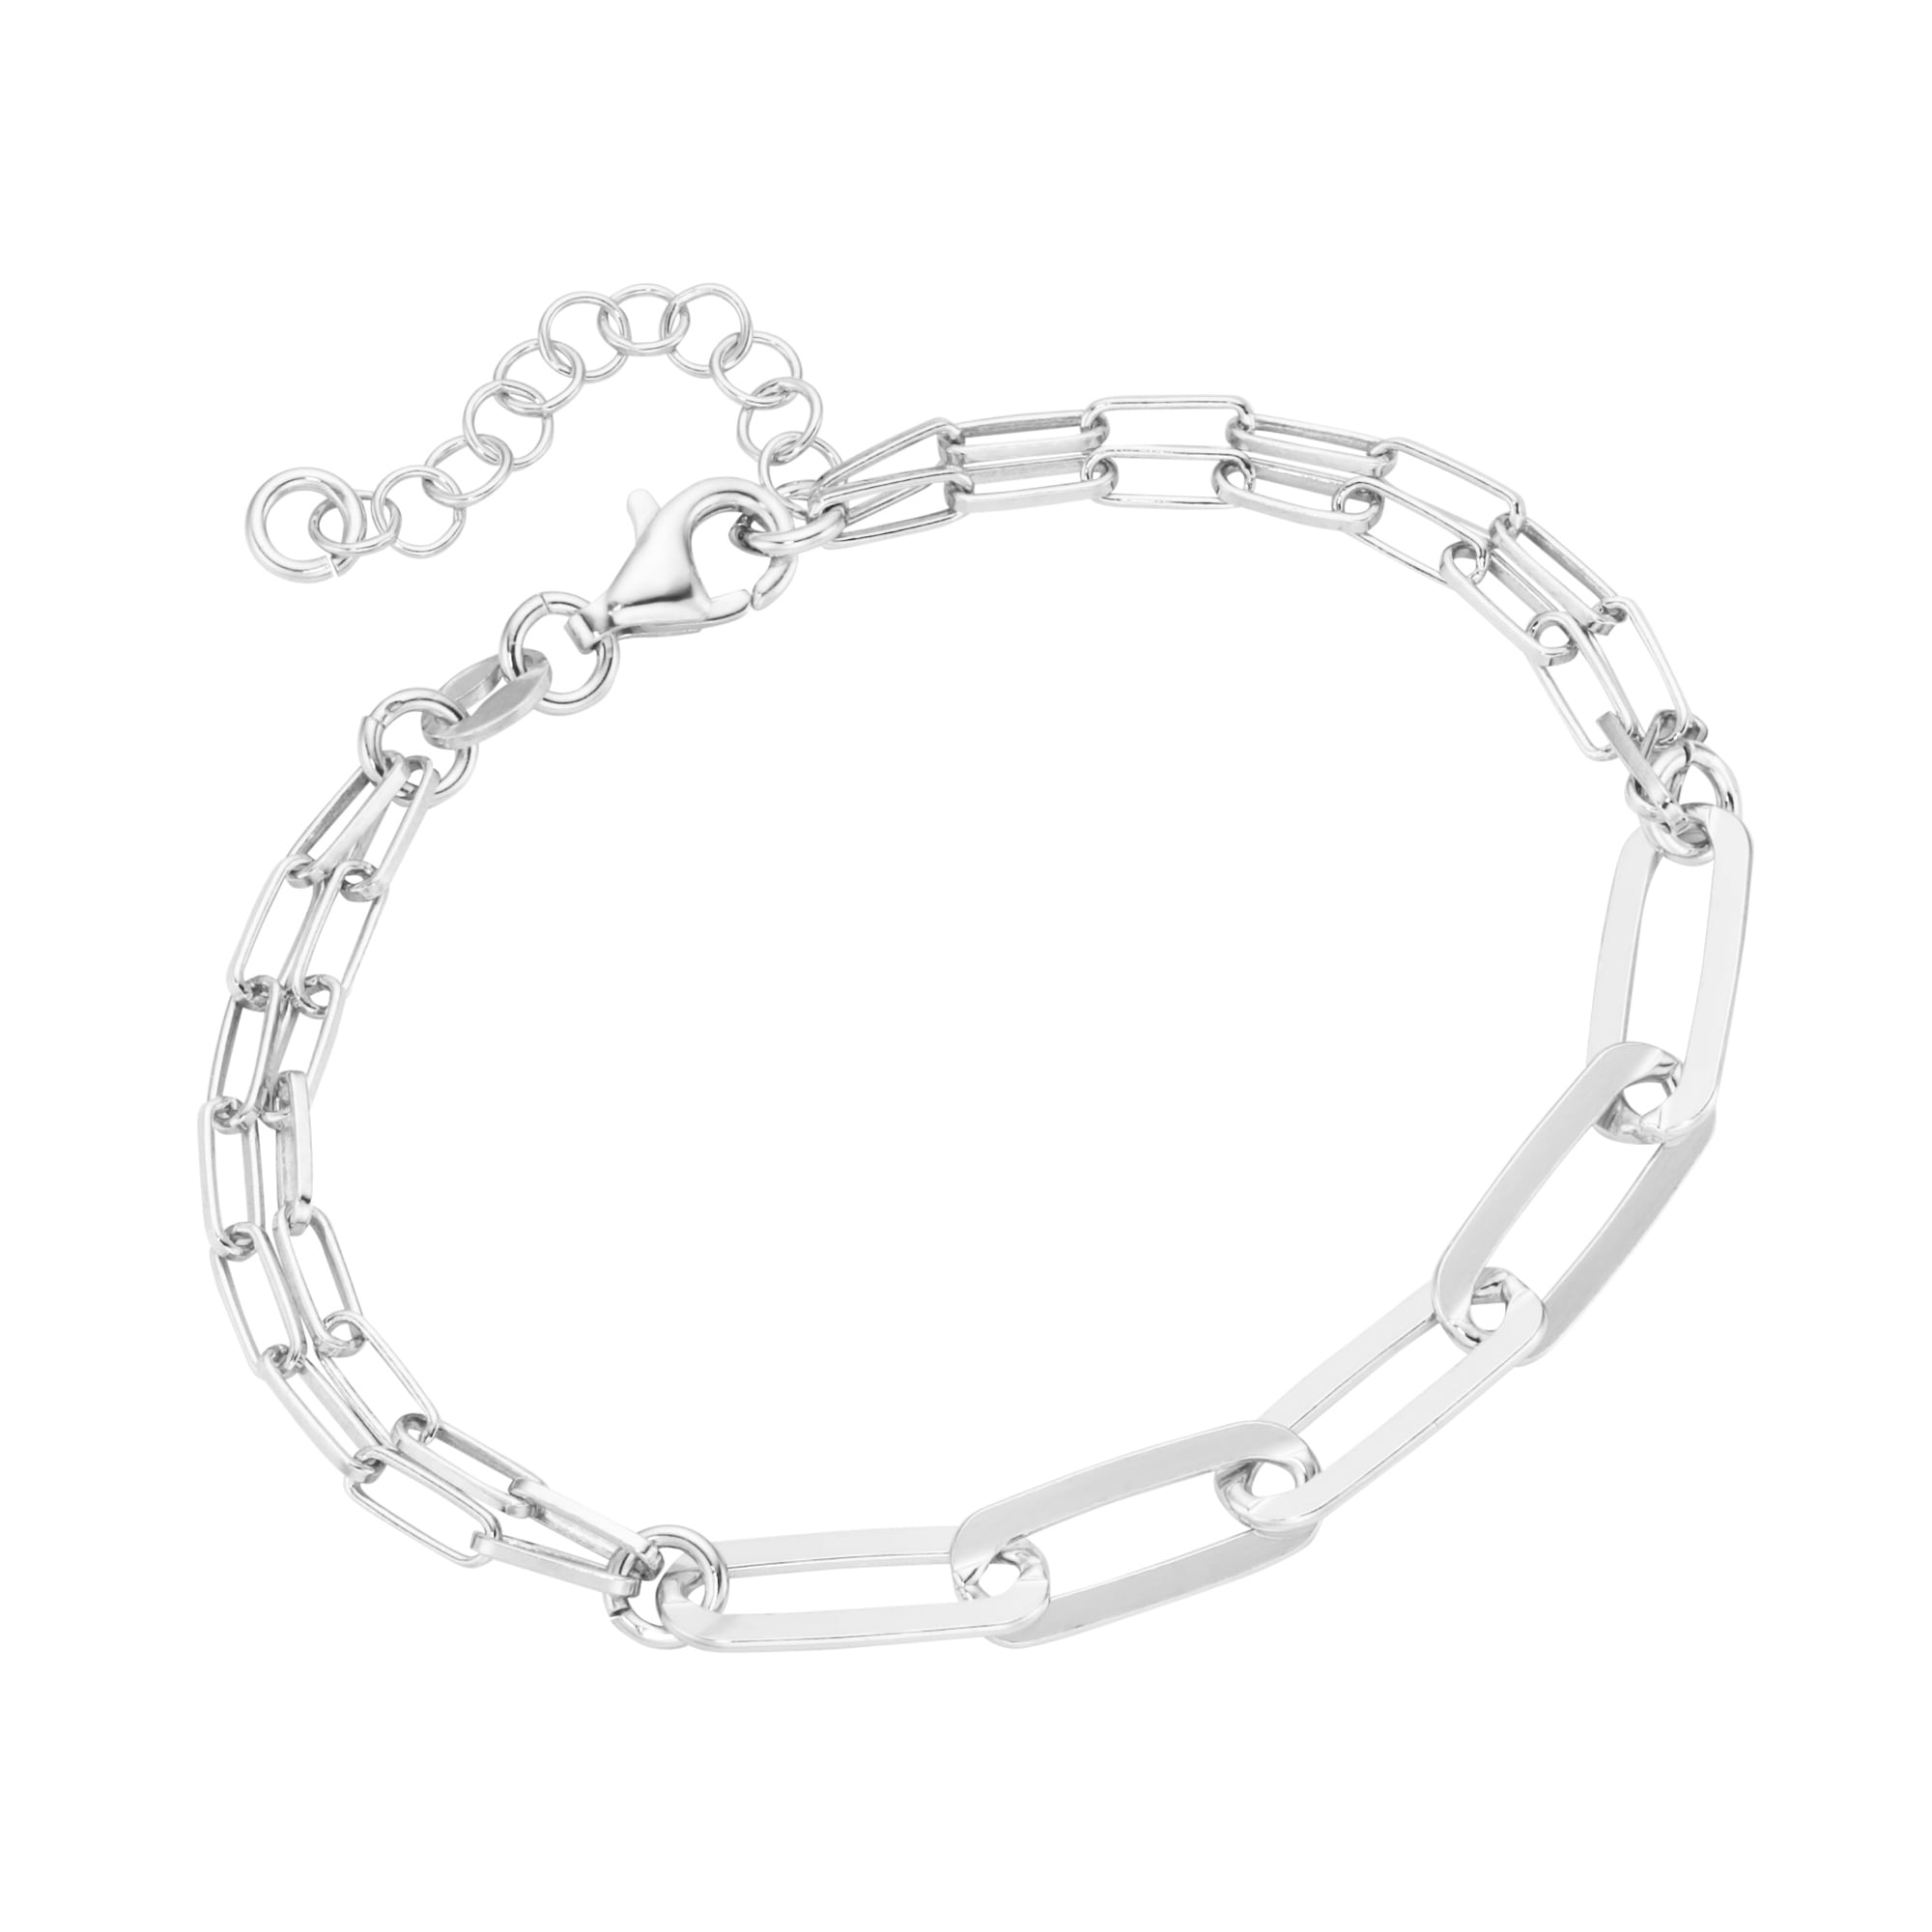 Glieder, längliche OTTO Online im Jewel ovale Silber Smart »Armband 925« Shop Armband